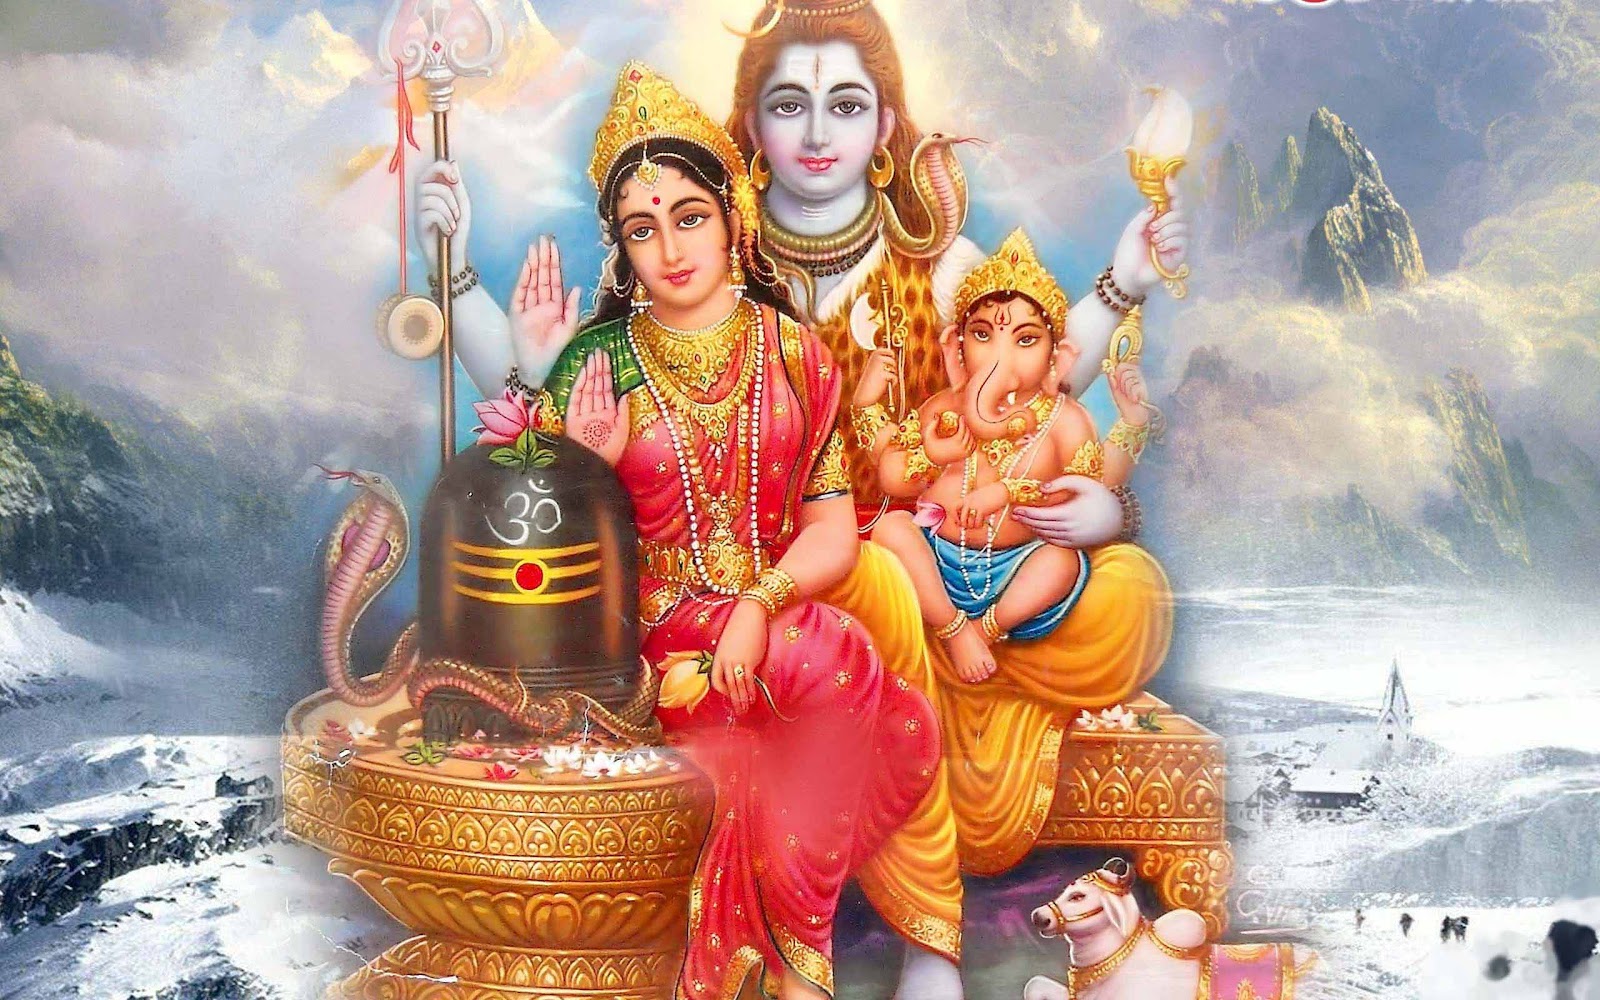 Lord Shiva HD Wallpapers - WallpaperSafari